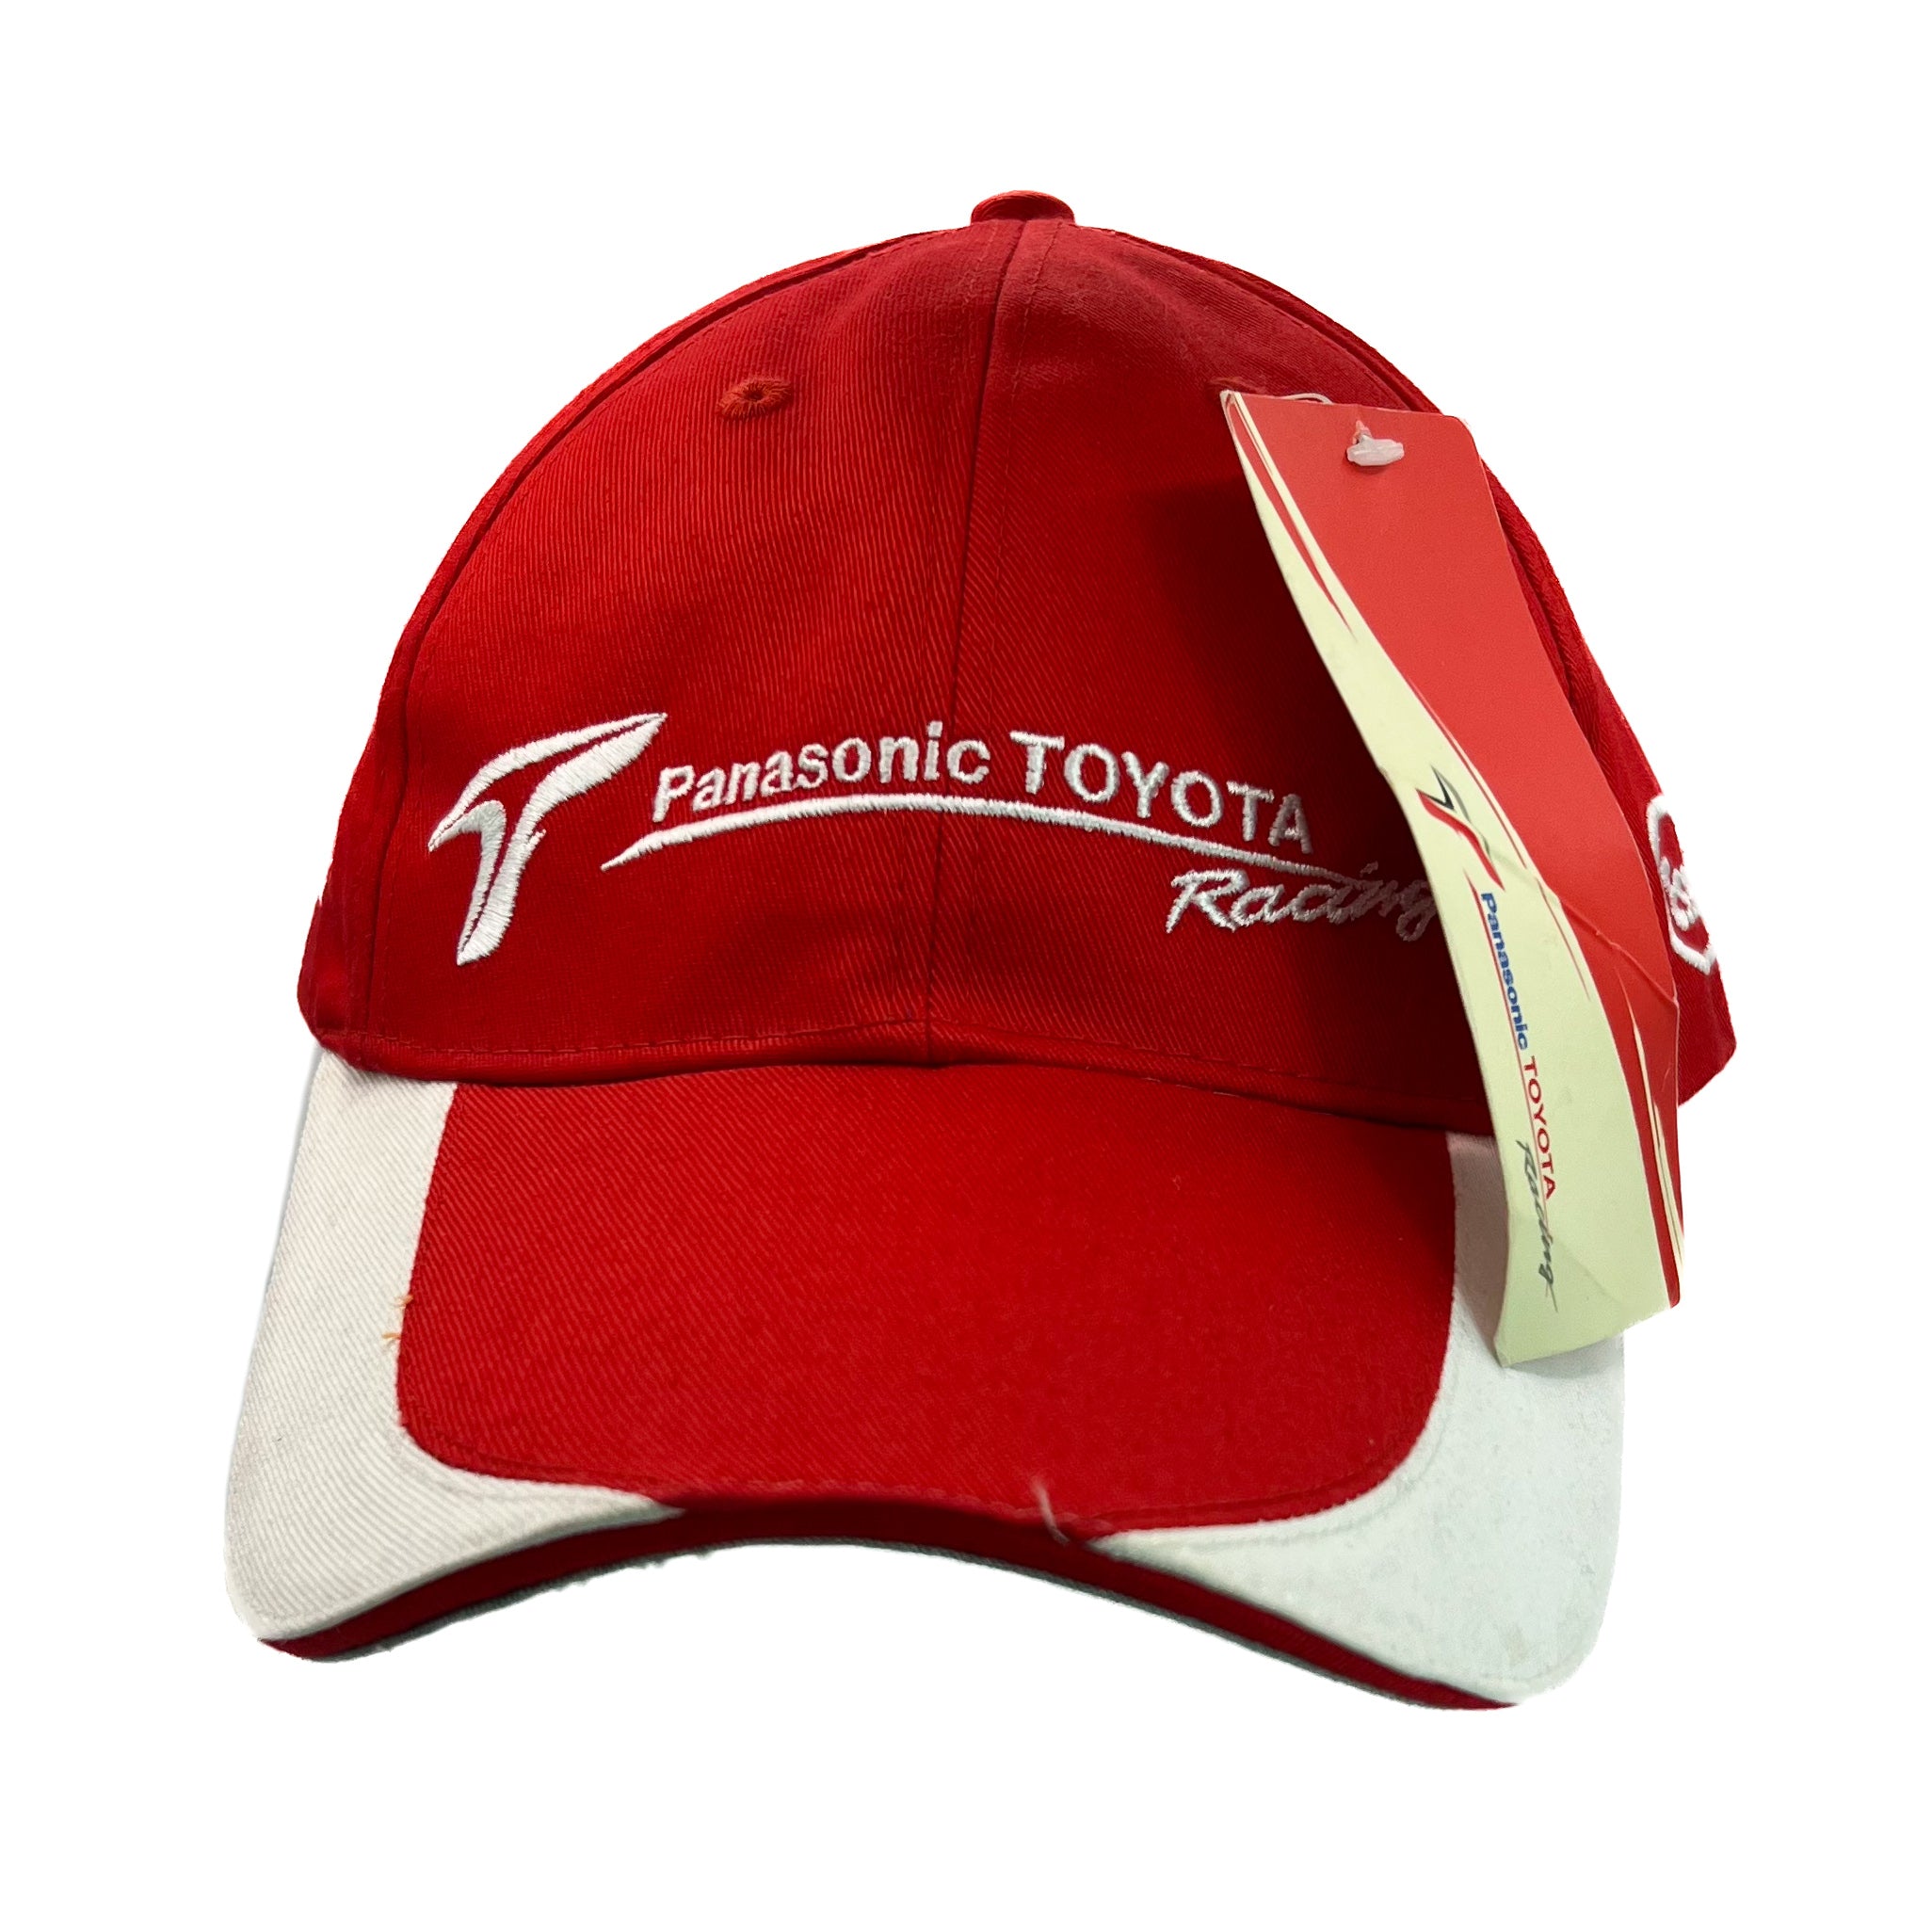 PANASONIC TOYOTA RACING “Denso Bridgestone” Embroidered Motorsports Ba –  George Worgan VTG